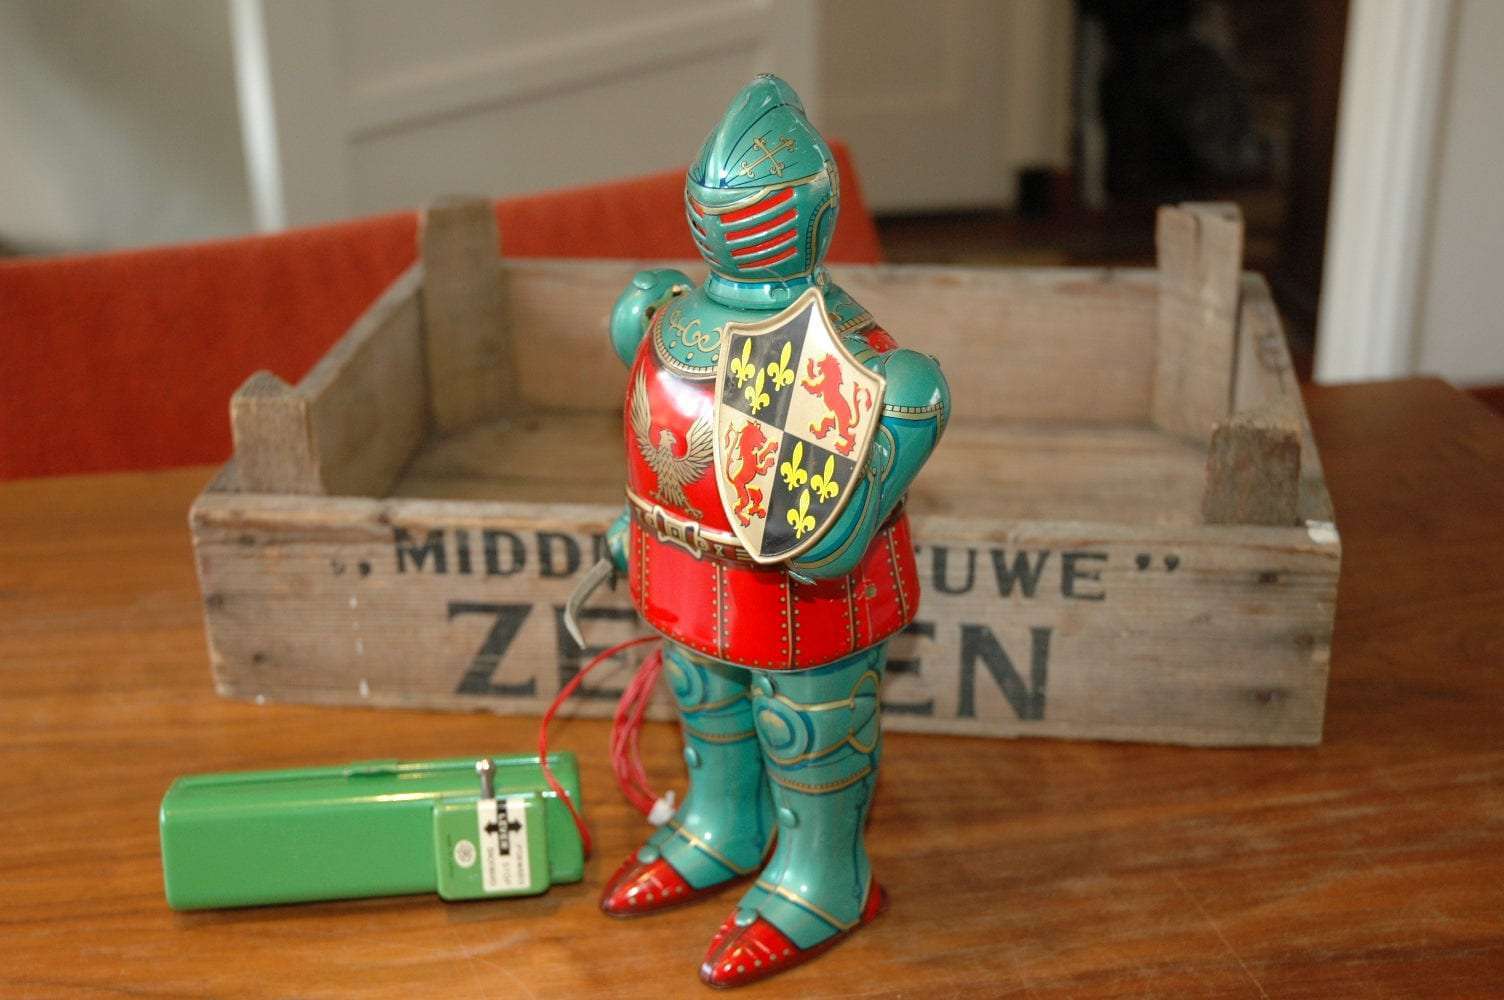 Modern Toys - Walking Knight in Armor